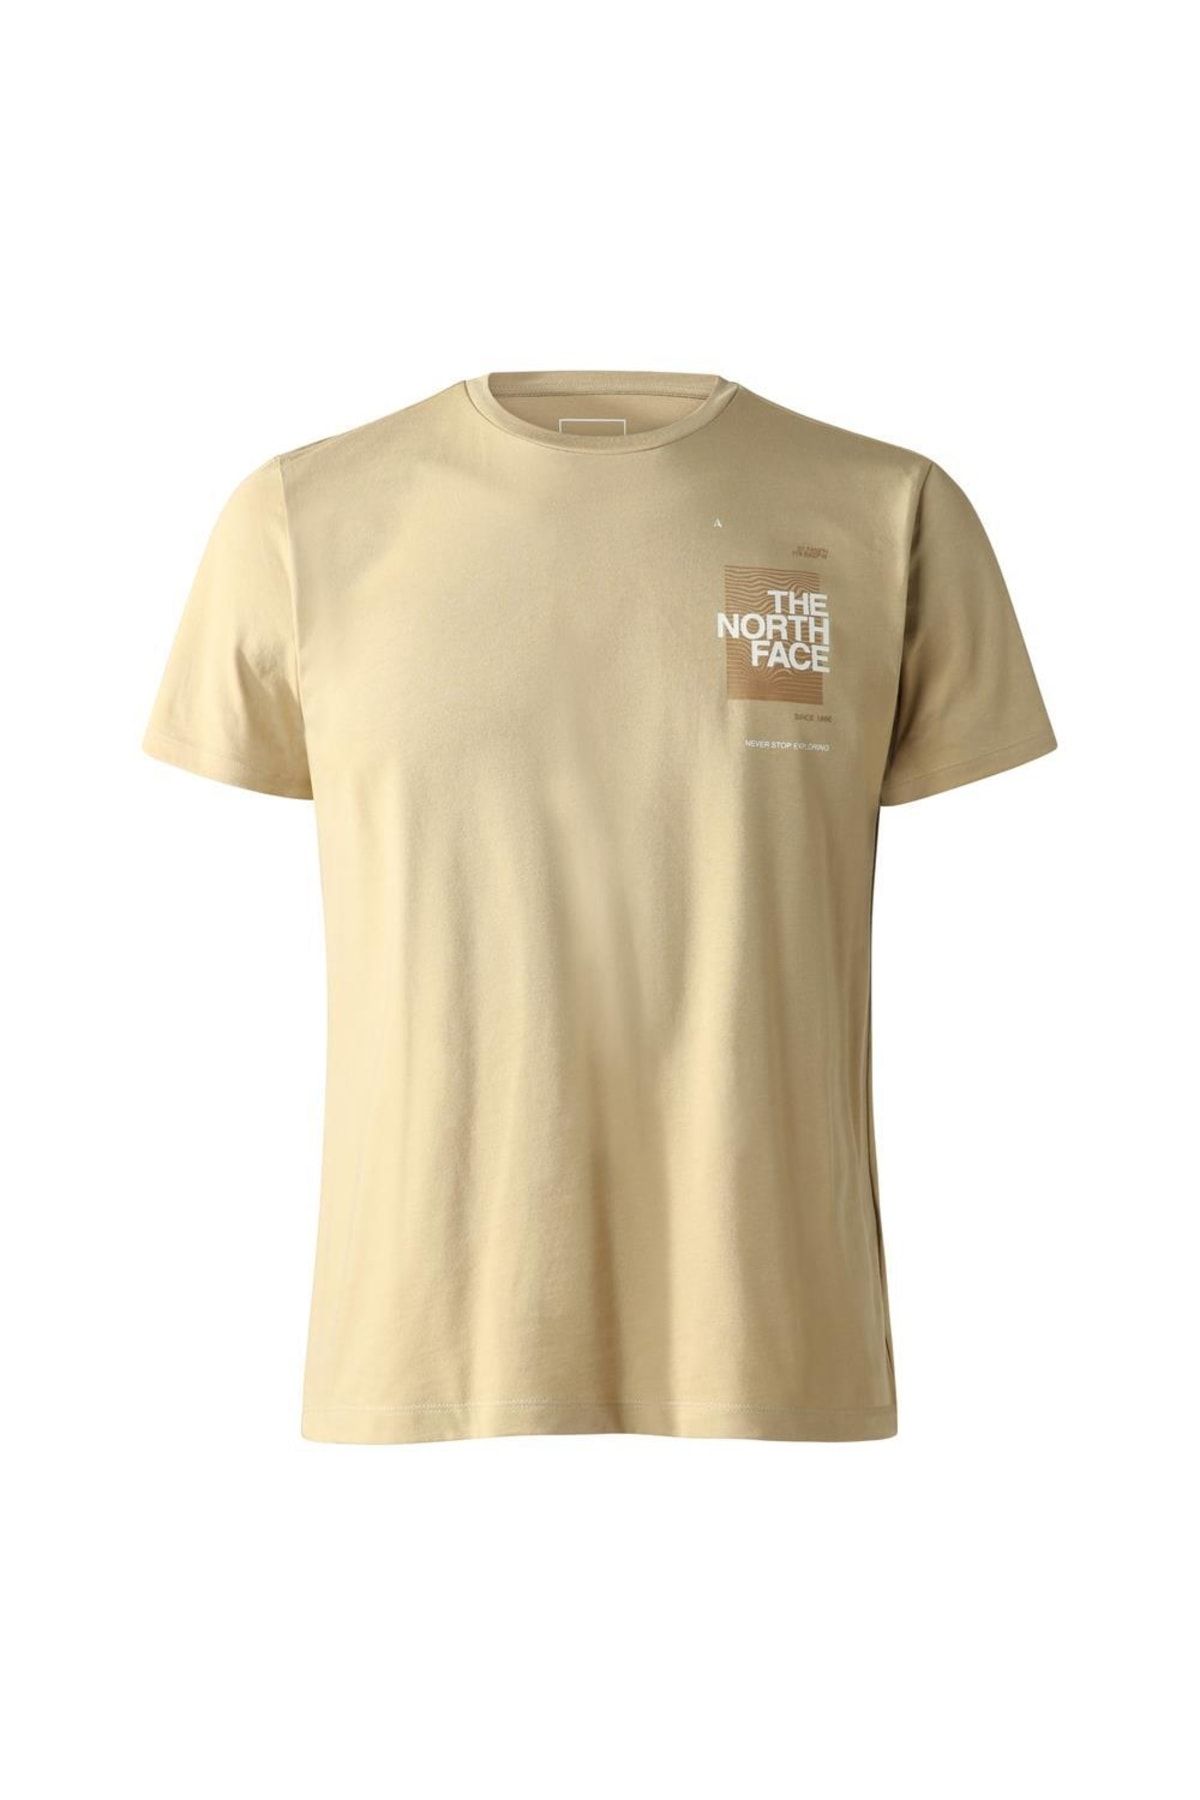 The North Face Foundation Graphic Tee S/s - Eu Erkek T-shirt